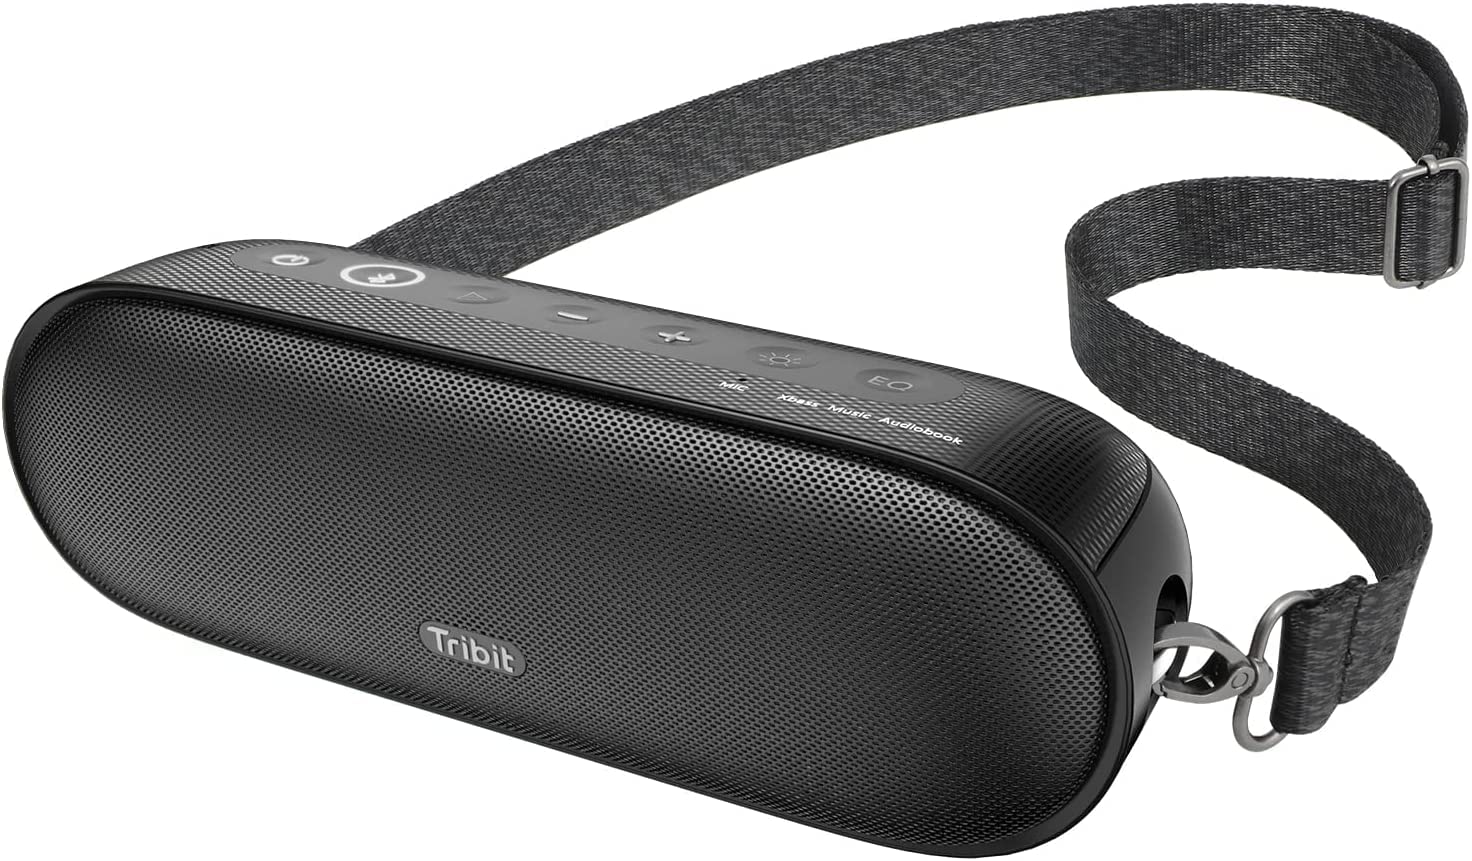 Tribit XSound Mega Portable Bluetooth Speaker $60.61 at Amazon